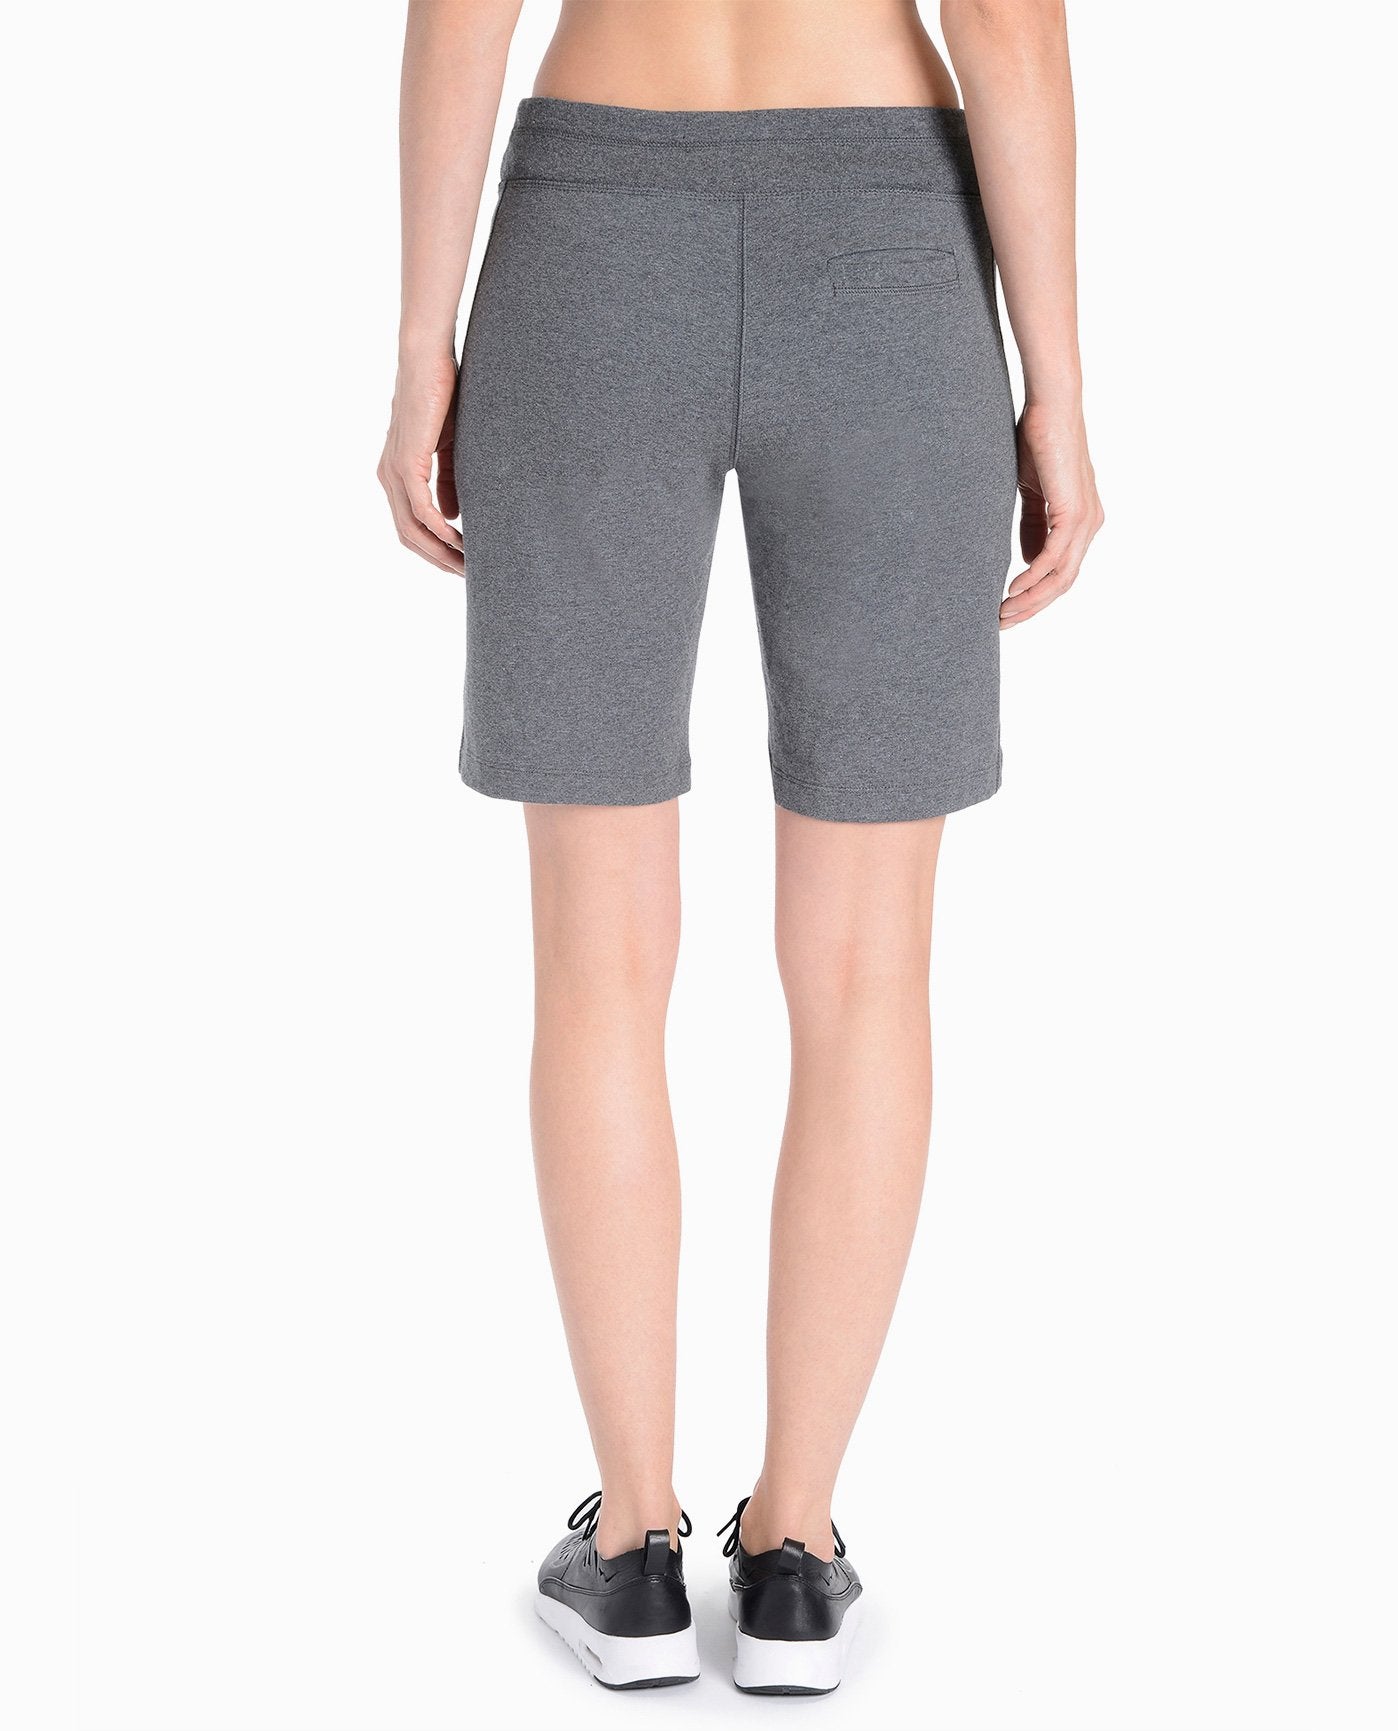 Danskin Now Athletic Shorts Size M - $8 - From Kristen